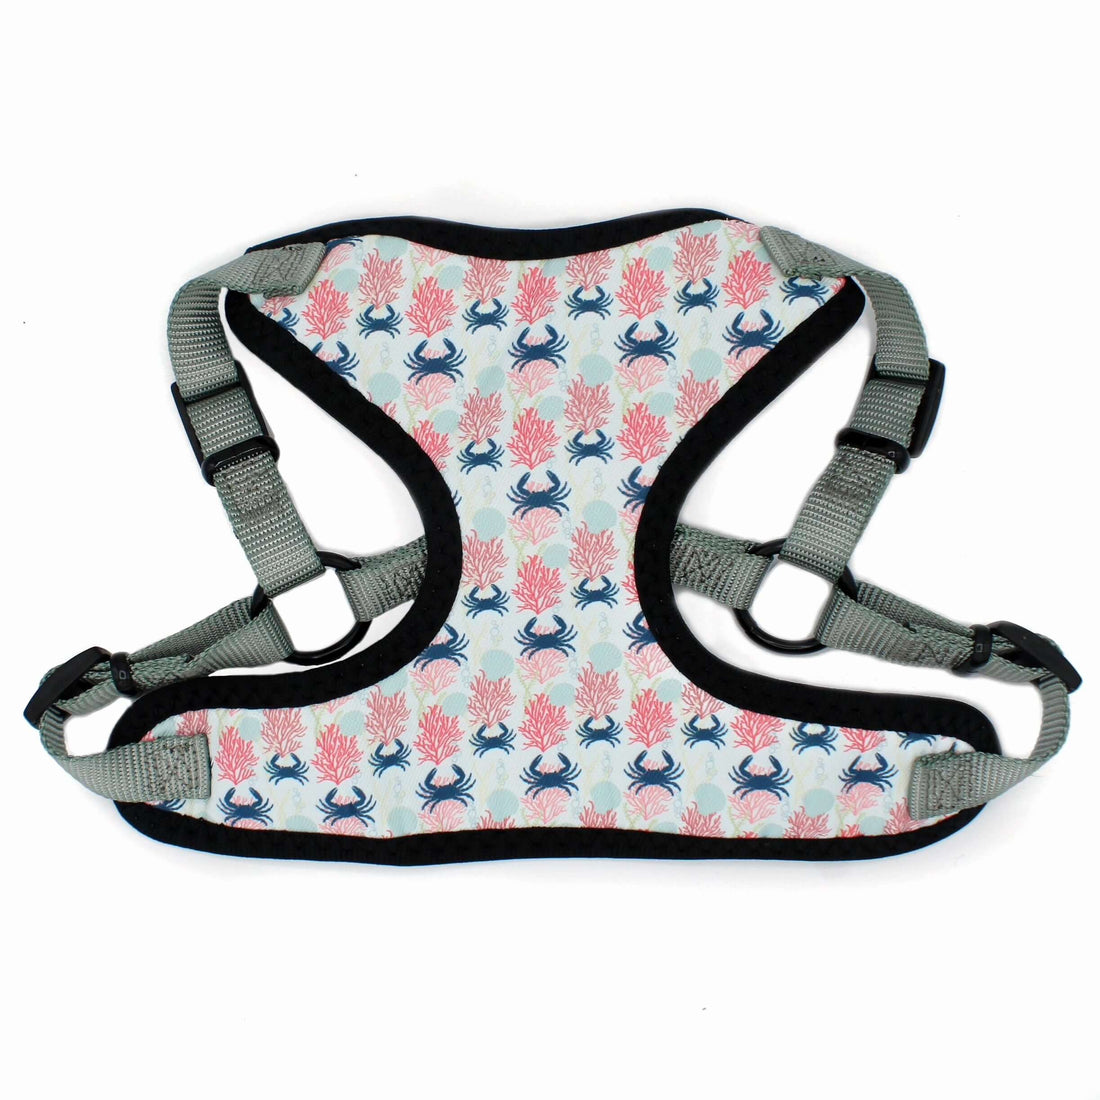 perfect fit choke free ocean pattern dog harness